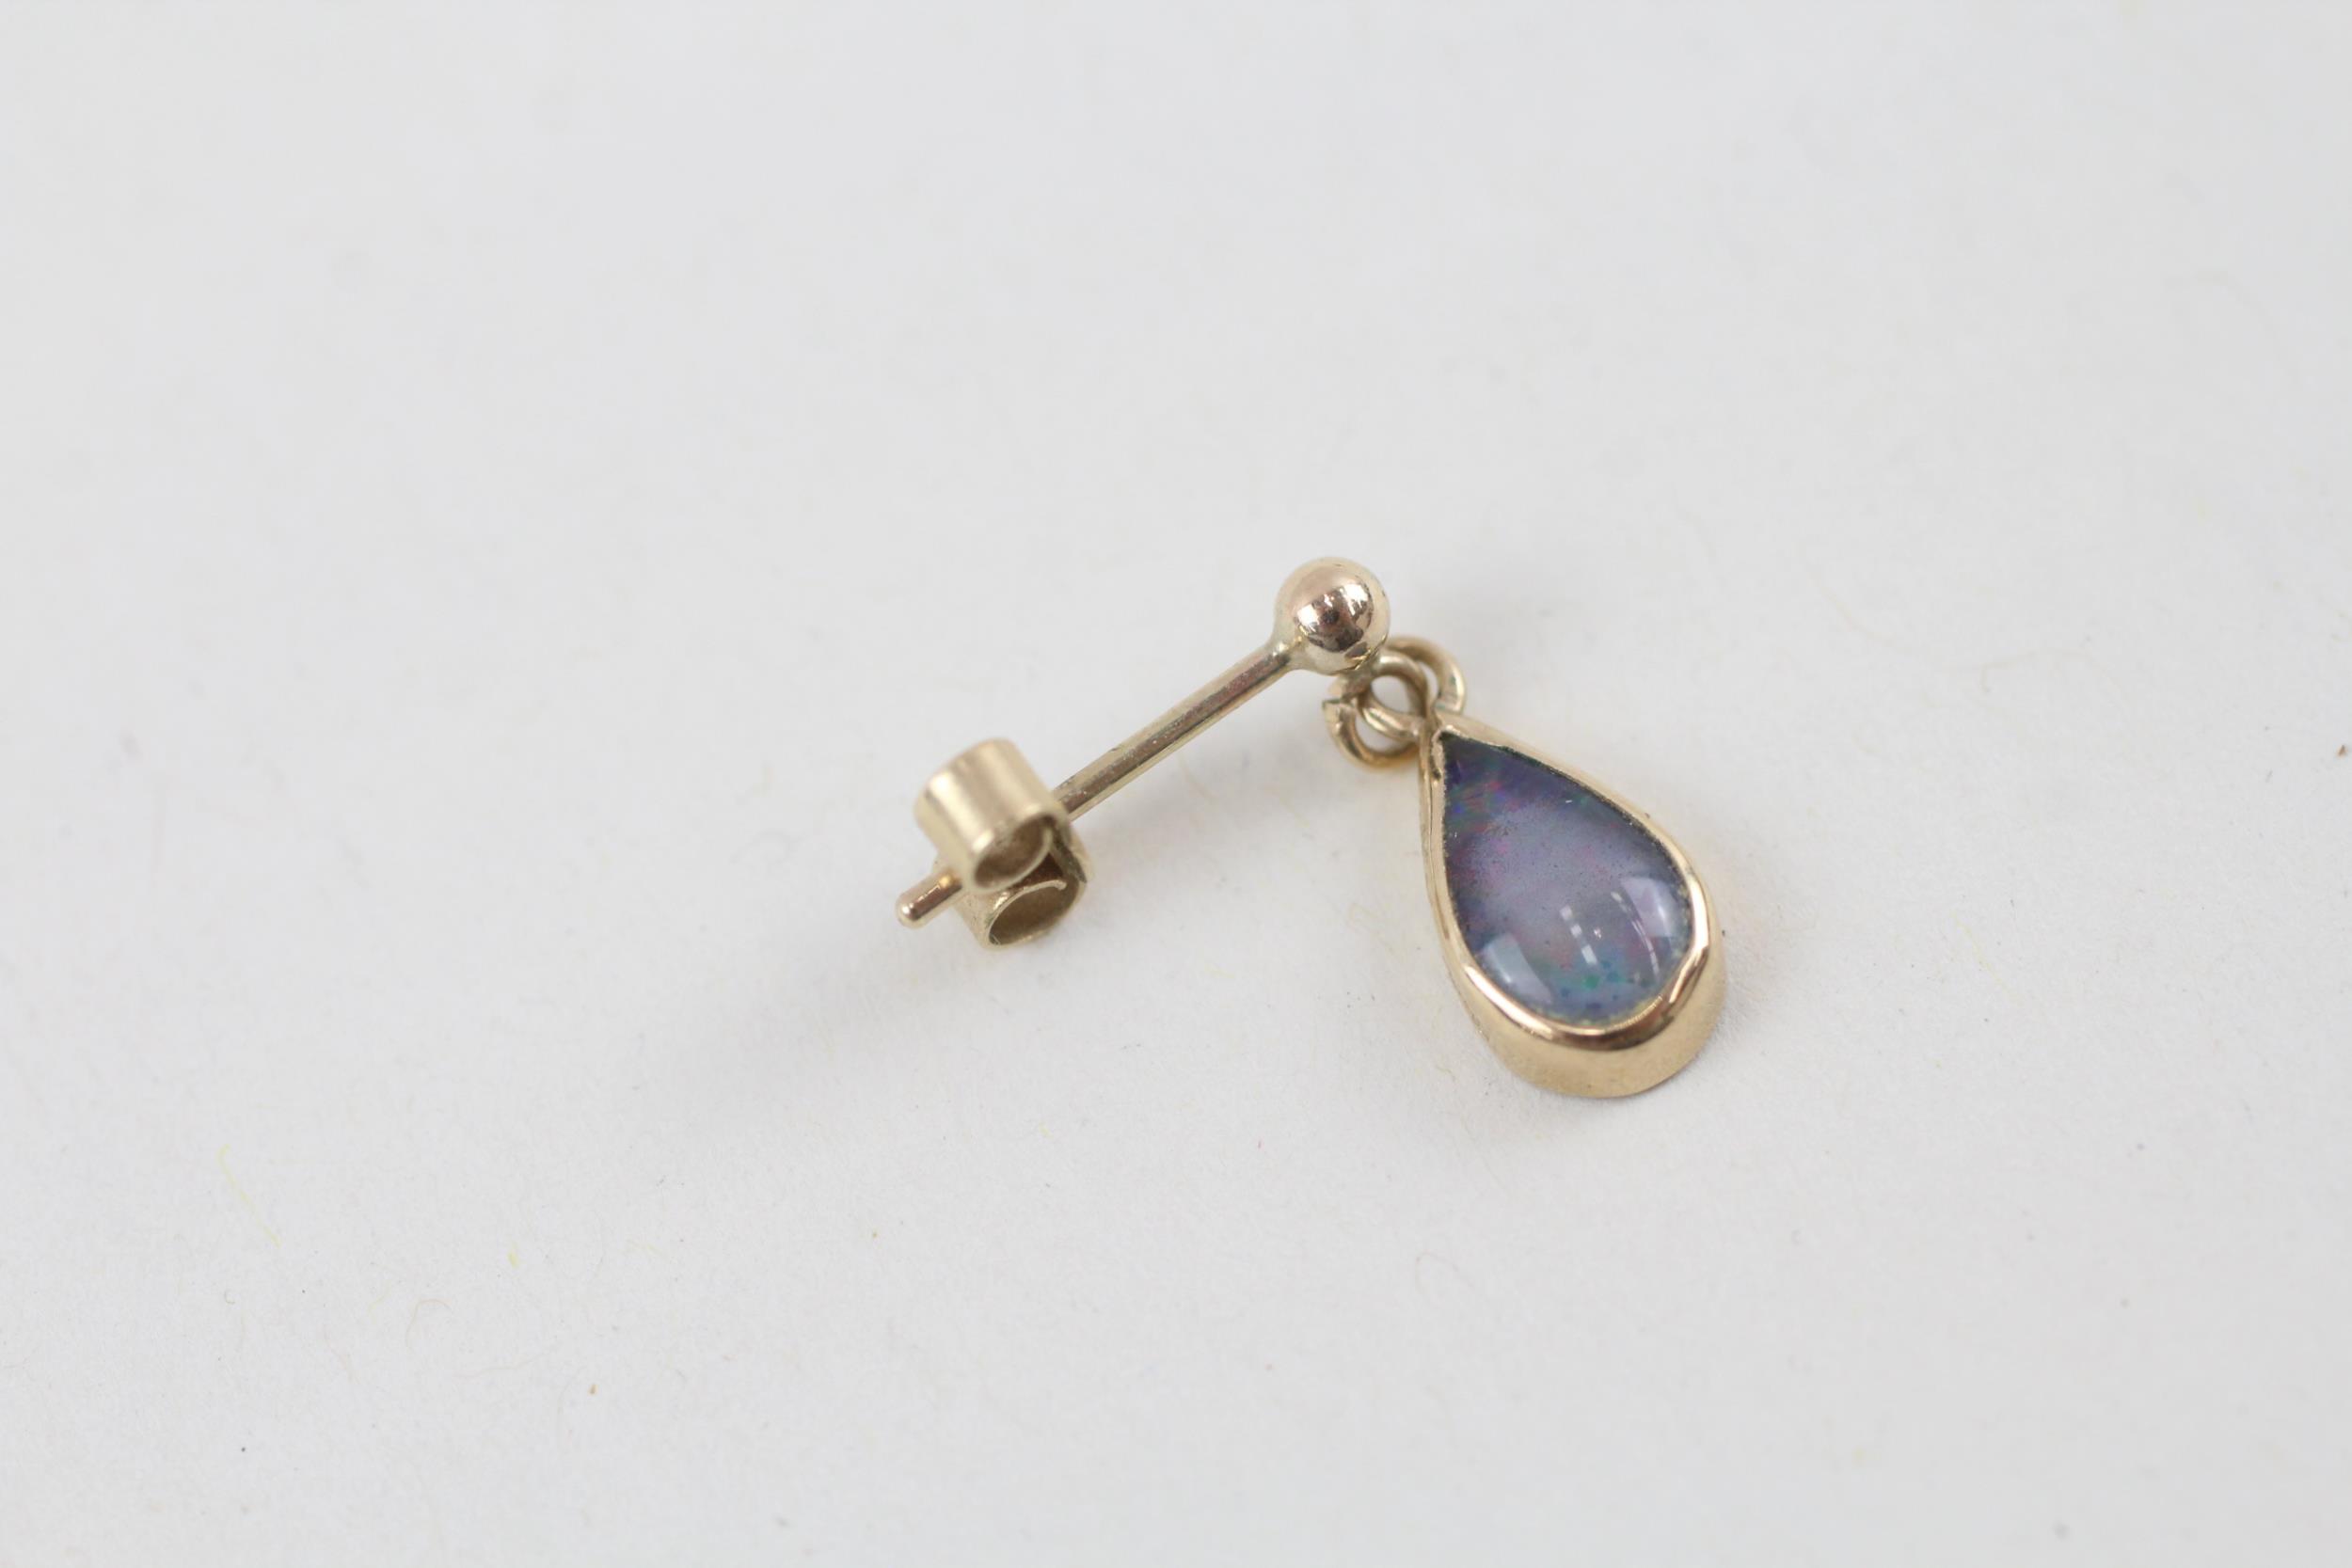 9ct gold vintage opal triplet drop earrings with scroll backs (0.8g) - Image 2 of 6